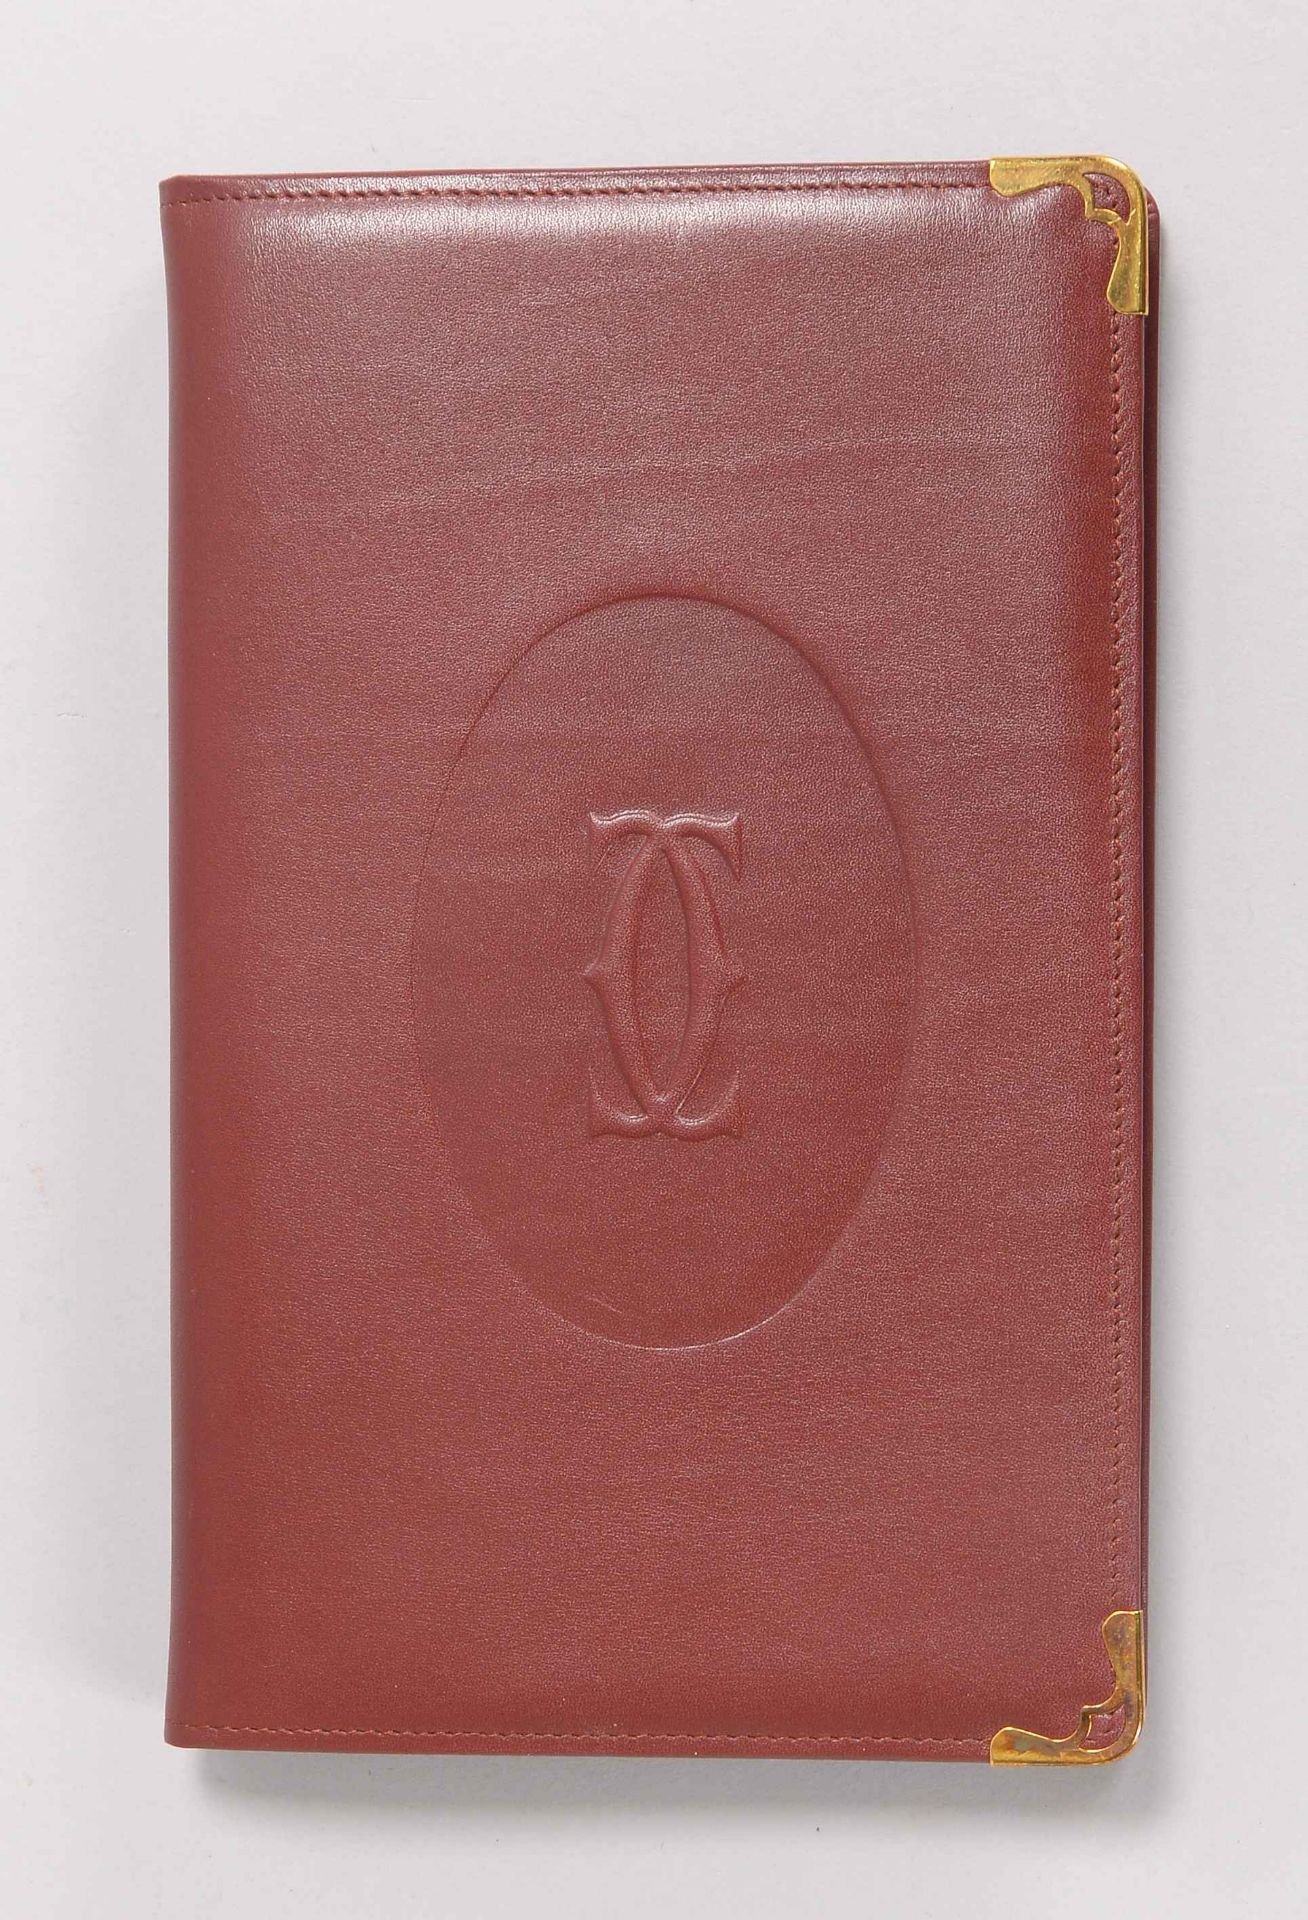 Cartier, Adressbuch, Einband burgund-rotes Rindsleder, im original Karton; Ma&szlig;e 22 x 14 cm